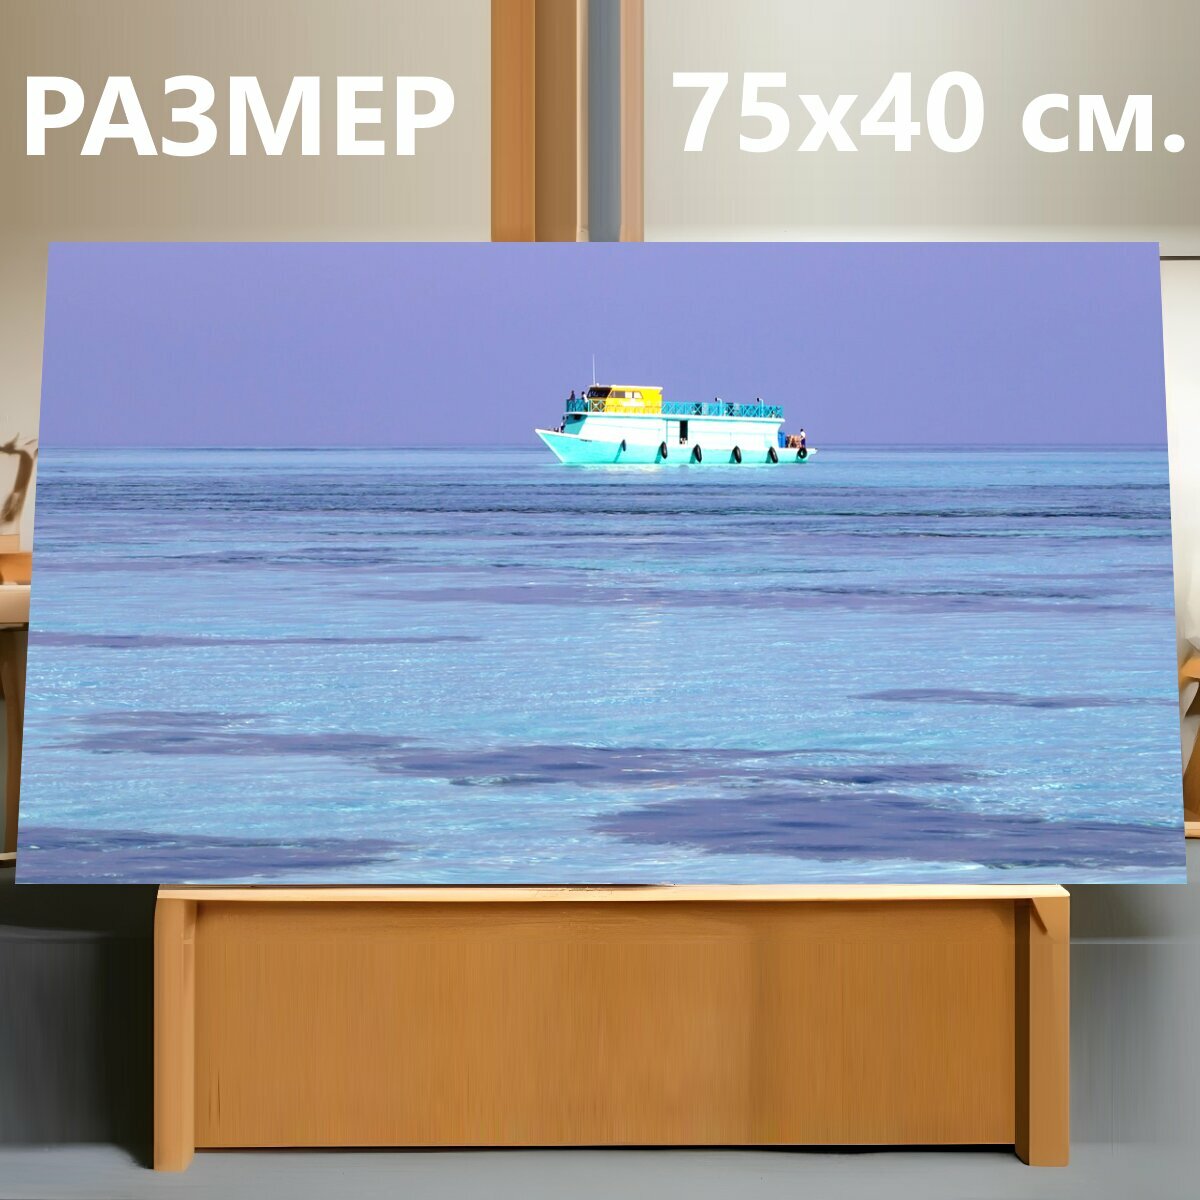 Картина на холсте "Лодка, судно, океан" на подрамнике 75х40 см. для интерьера